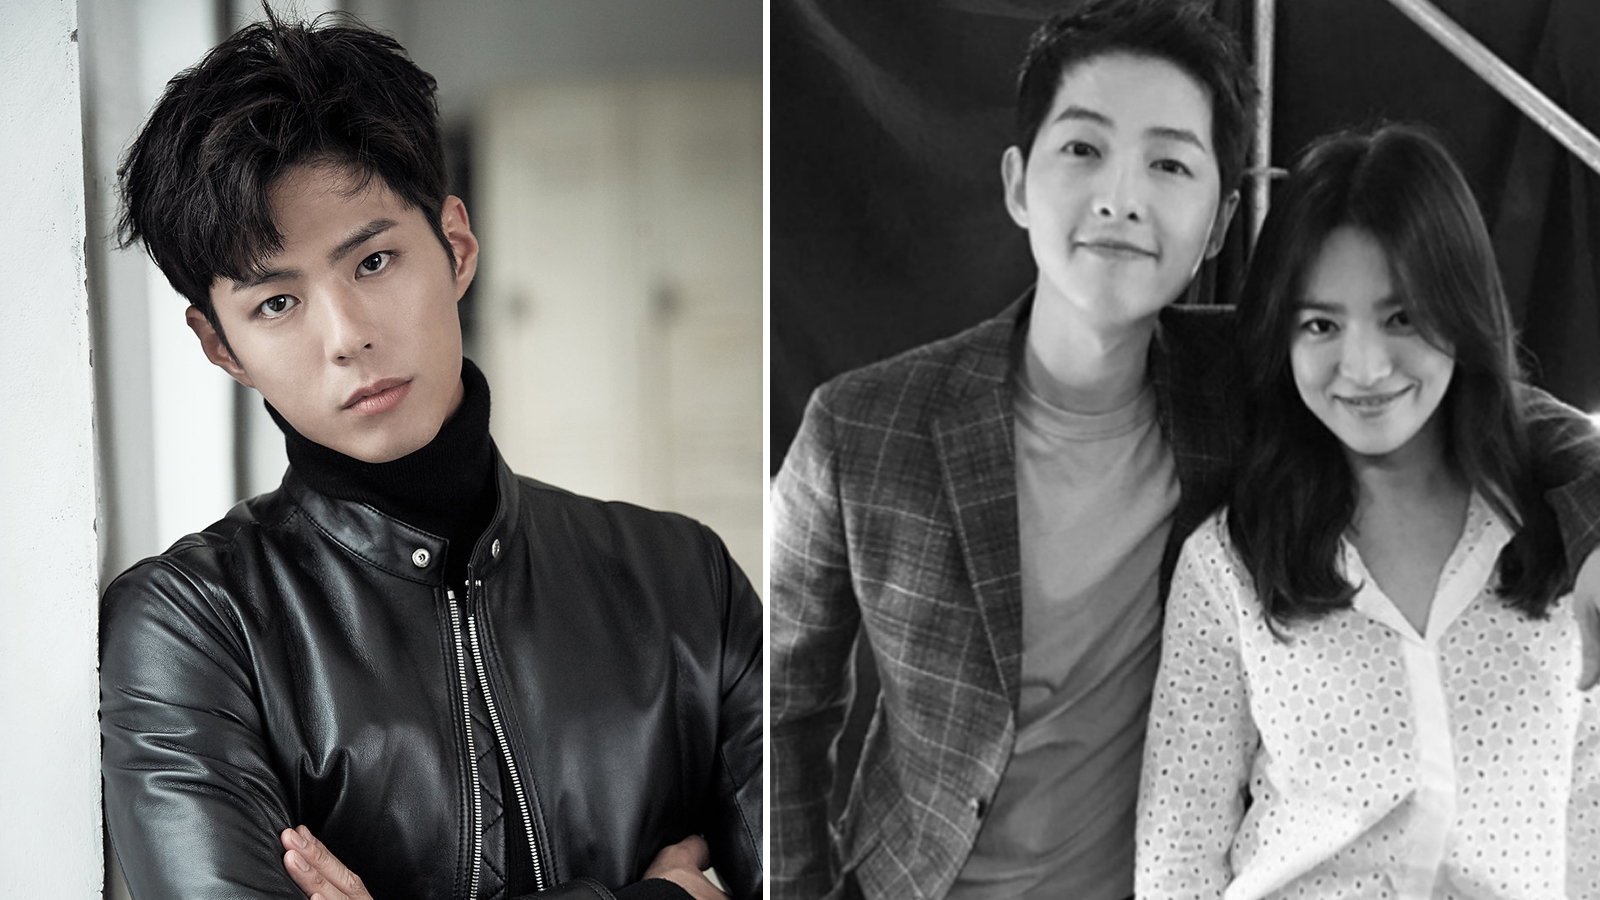 South Korean actor Park Bo-gum opens Instagram account